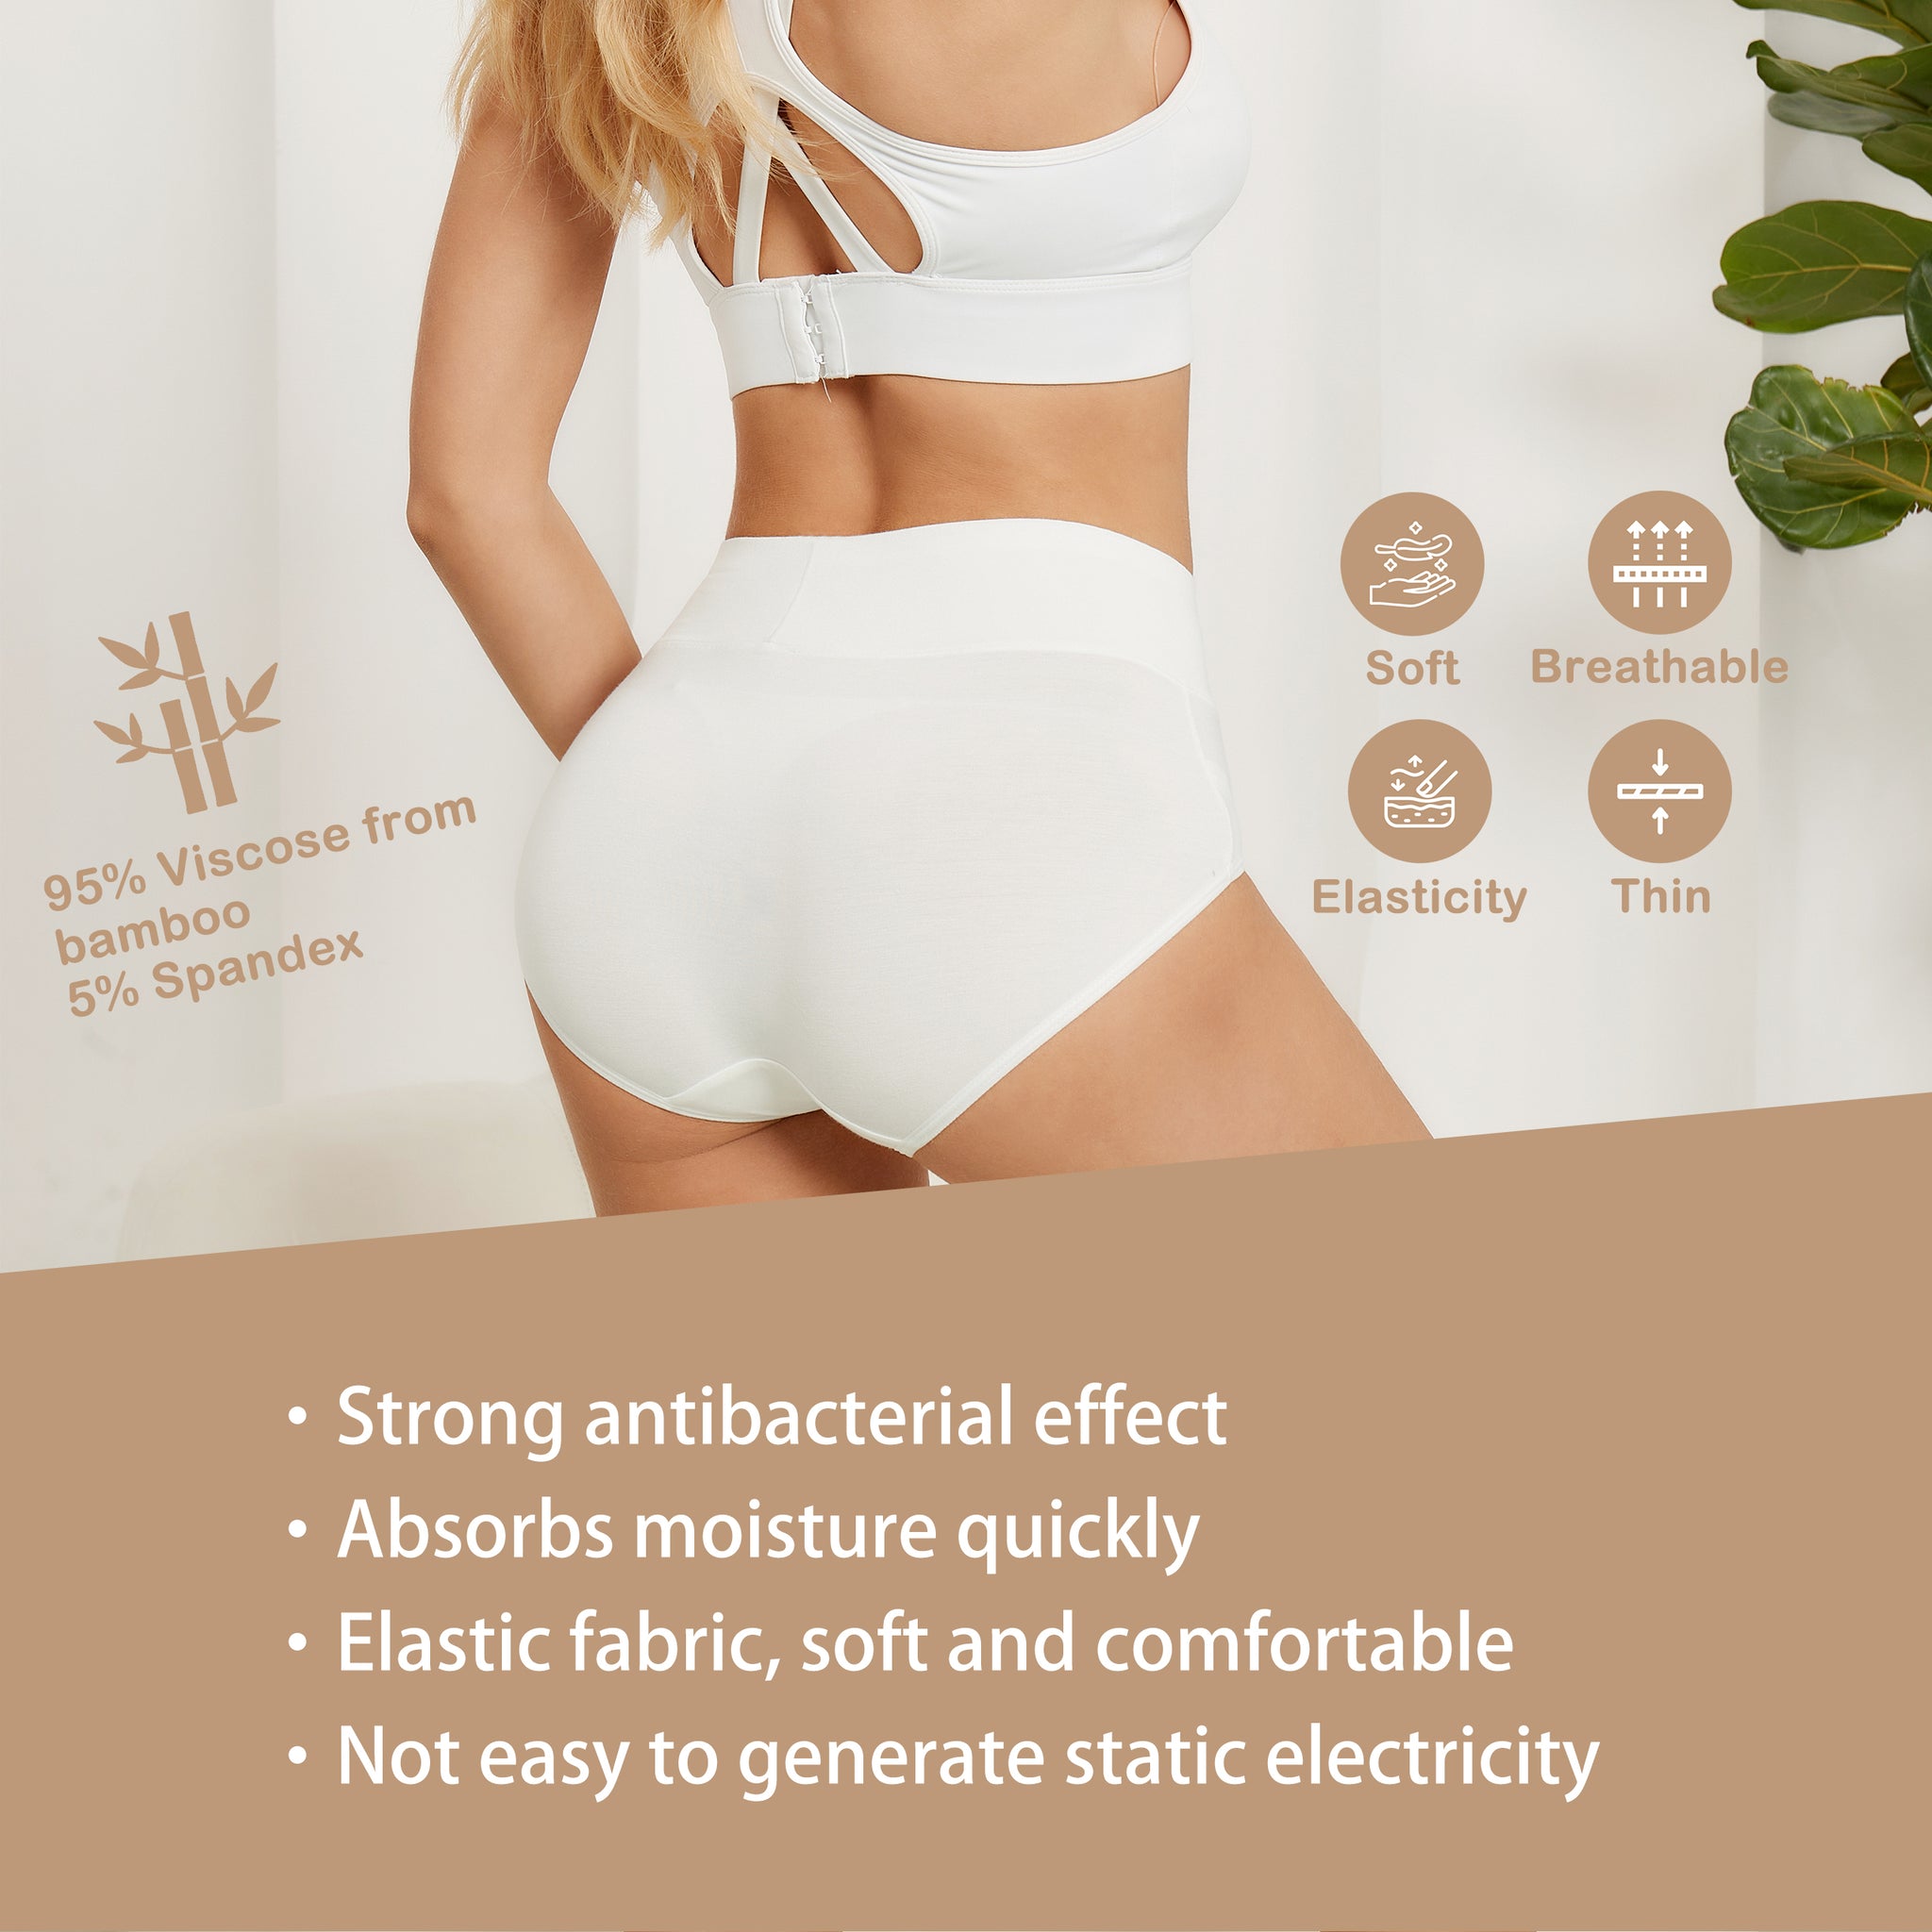 Bamboo Fiber Women Luxury Underwear Silky Ultra Soft Briefs